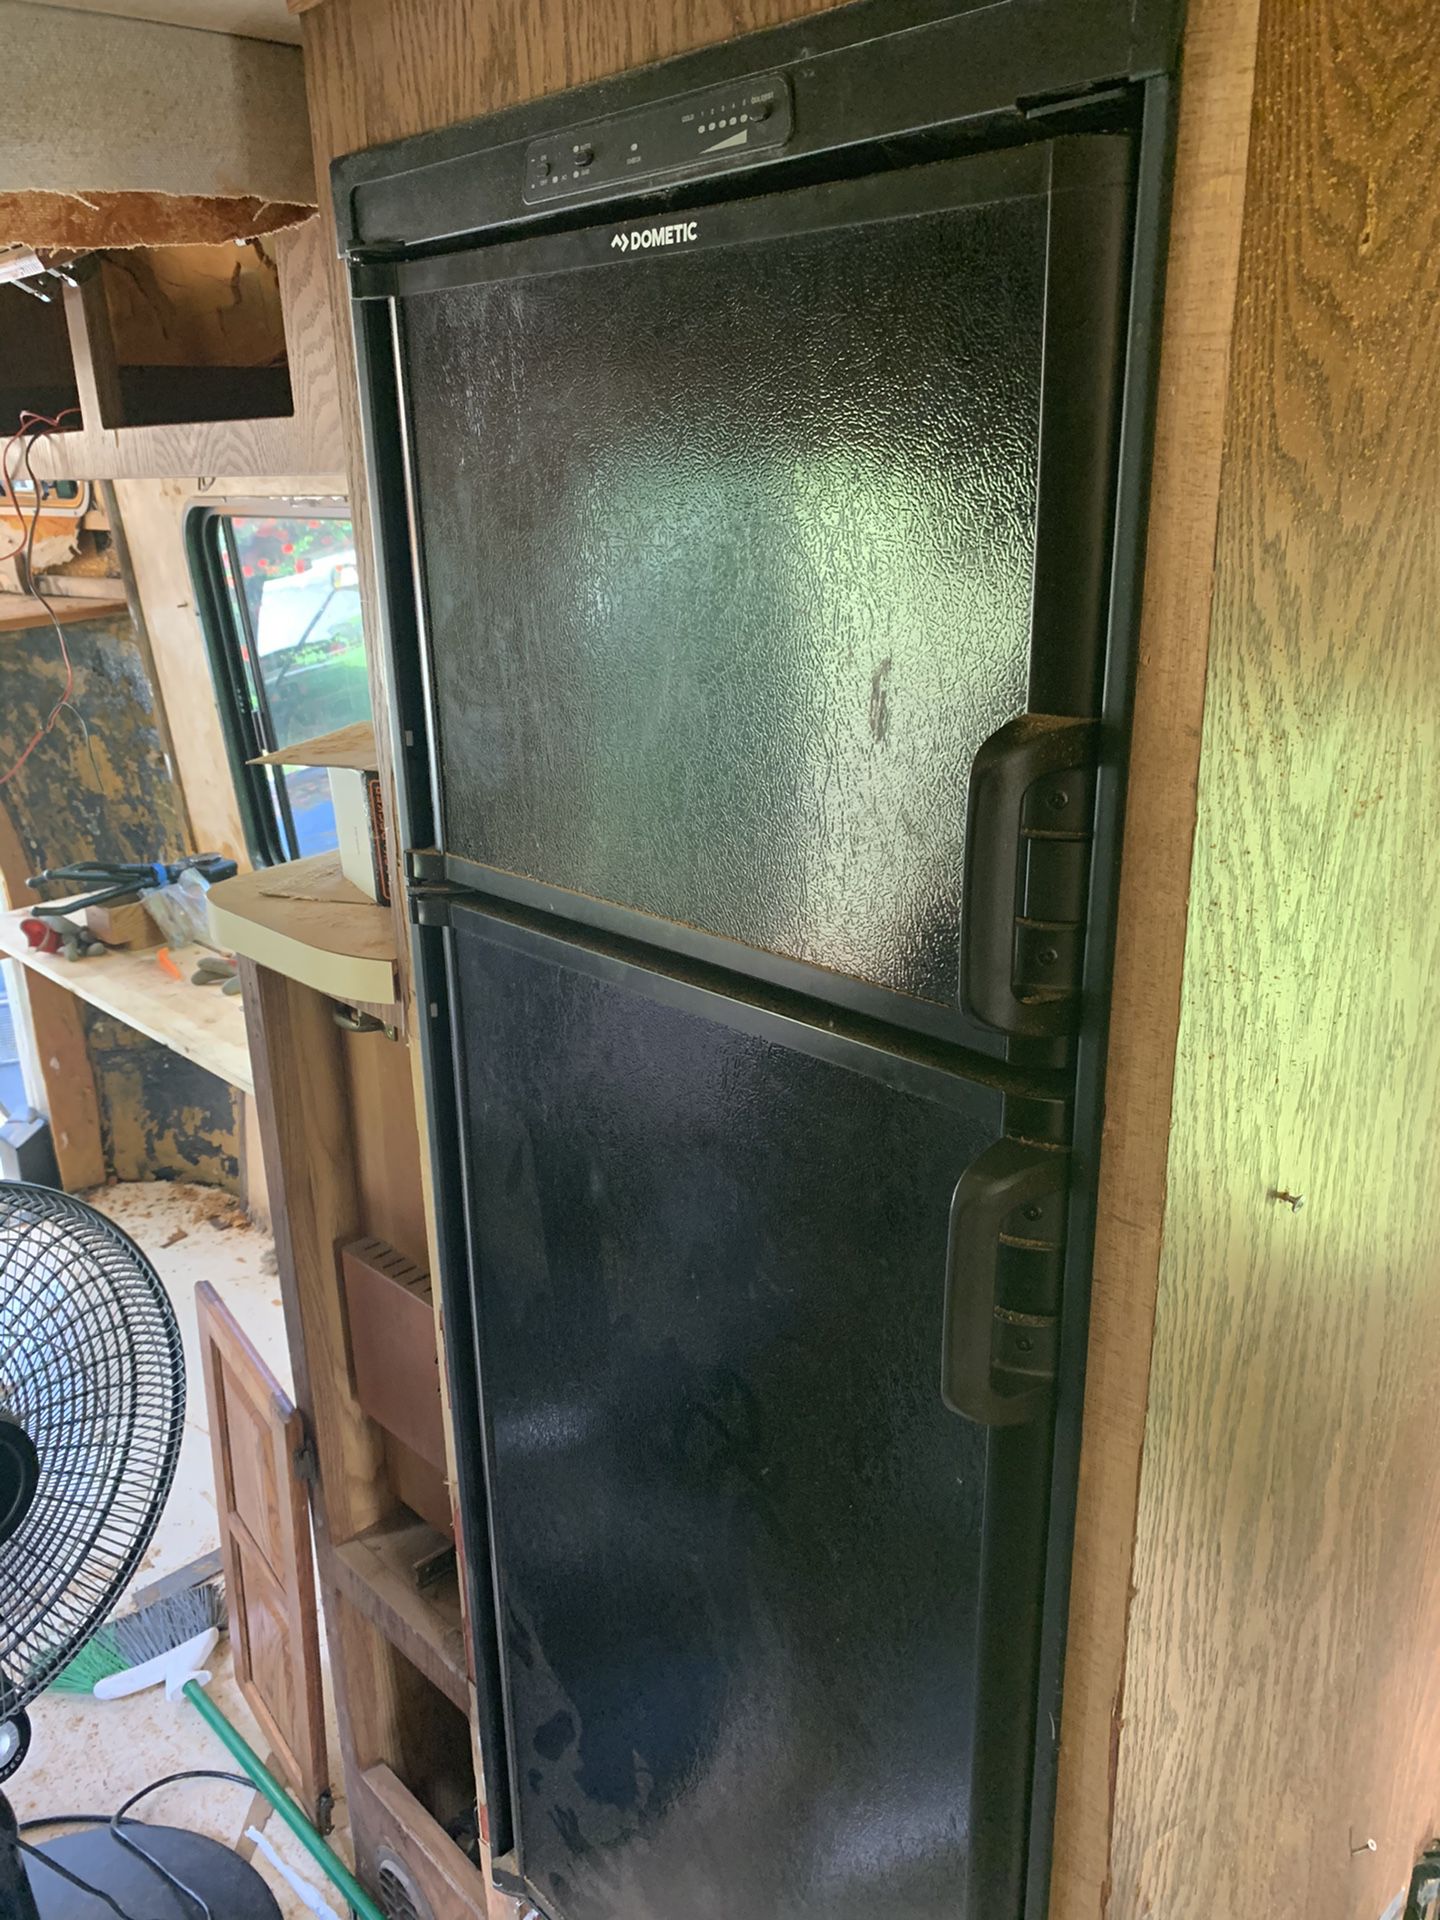 Type C RV propane fridge propane stove/oven and microwave